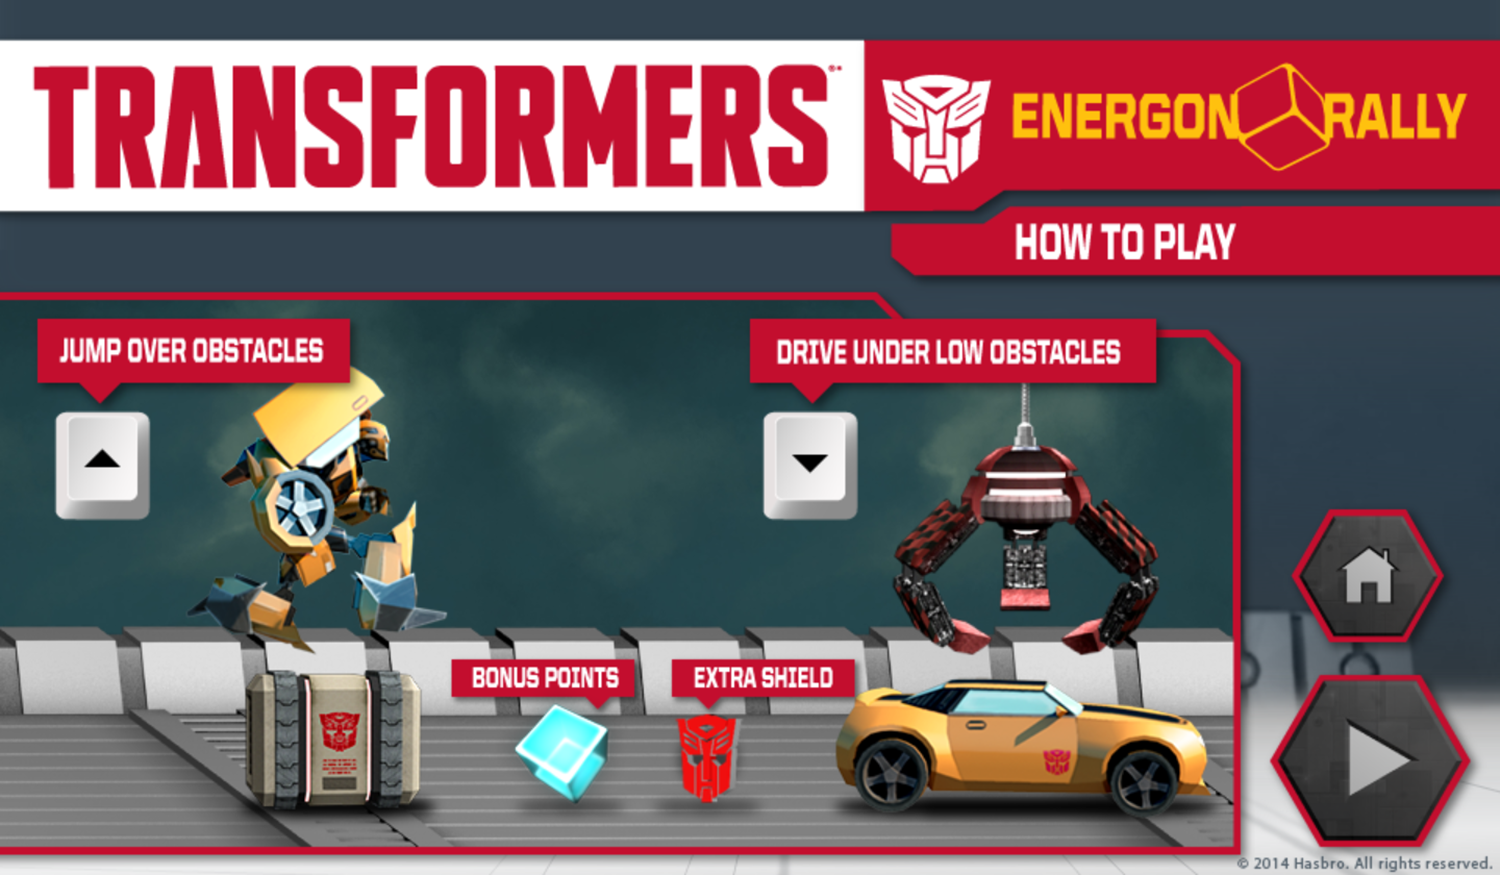 Transformers Energon Rally Game How To Play Screenshot.